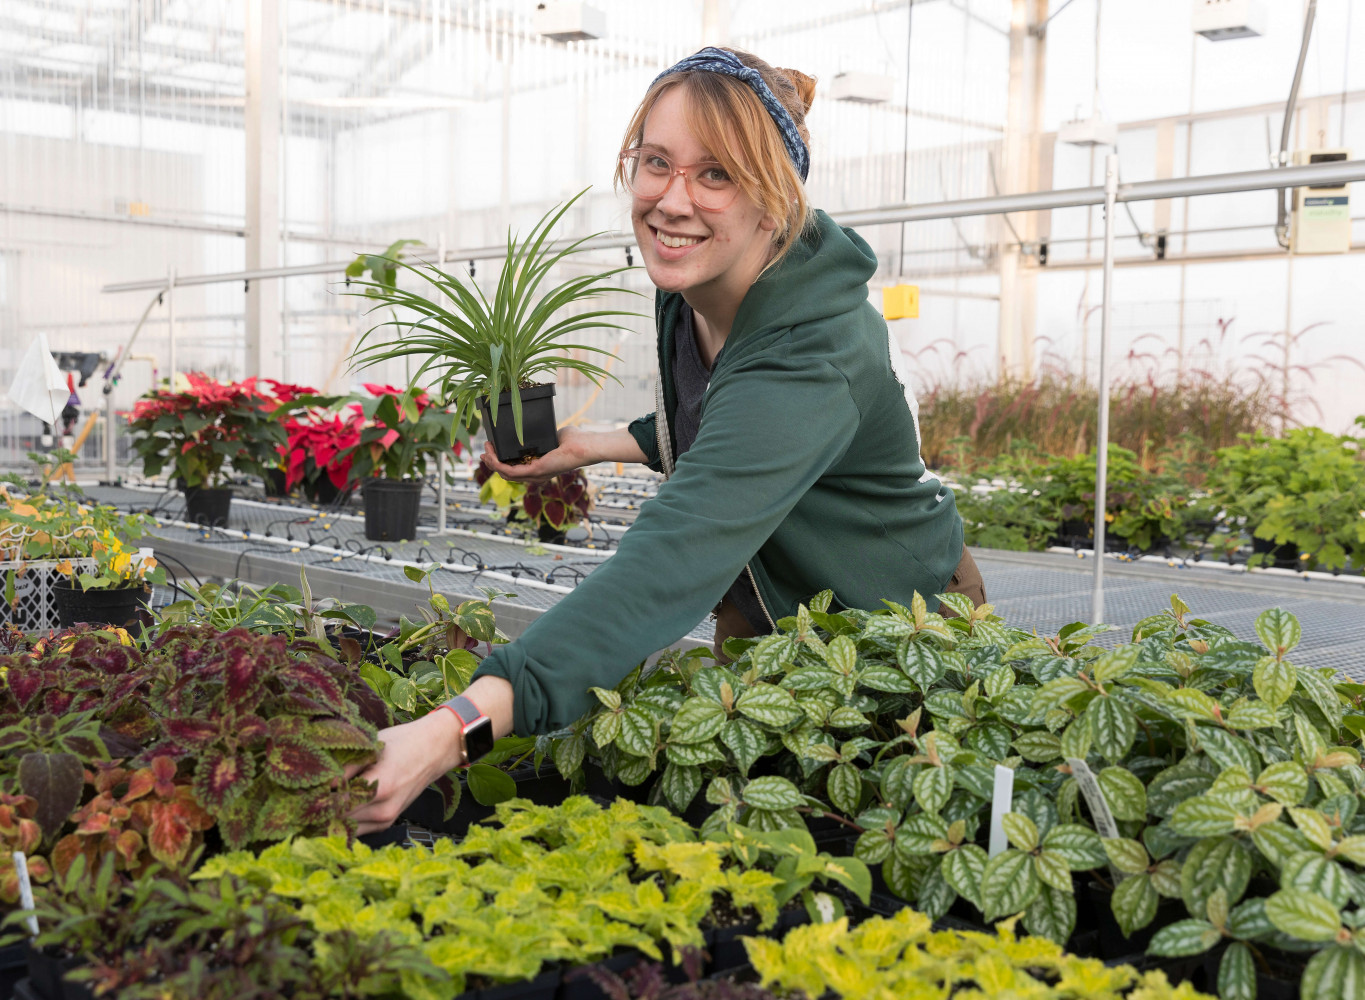 Woman tending plants in greenhouse